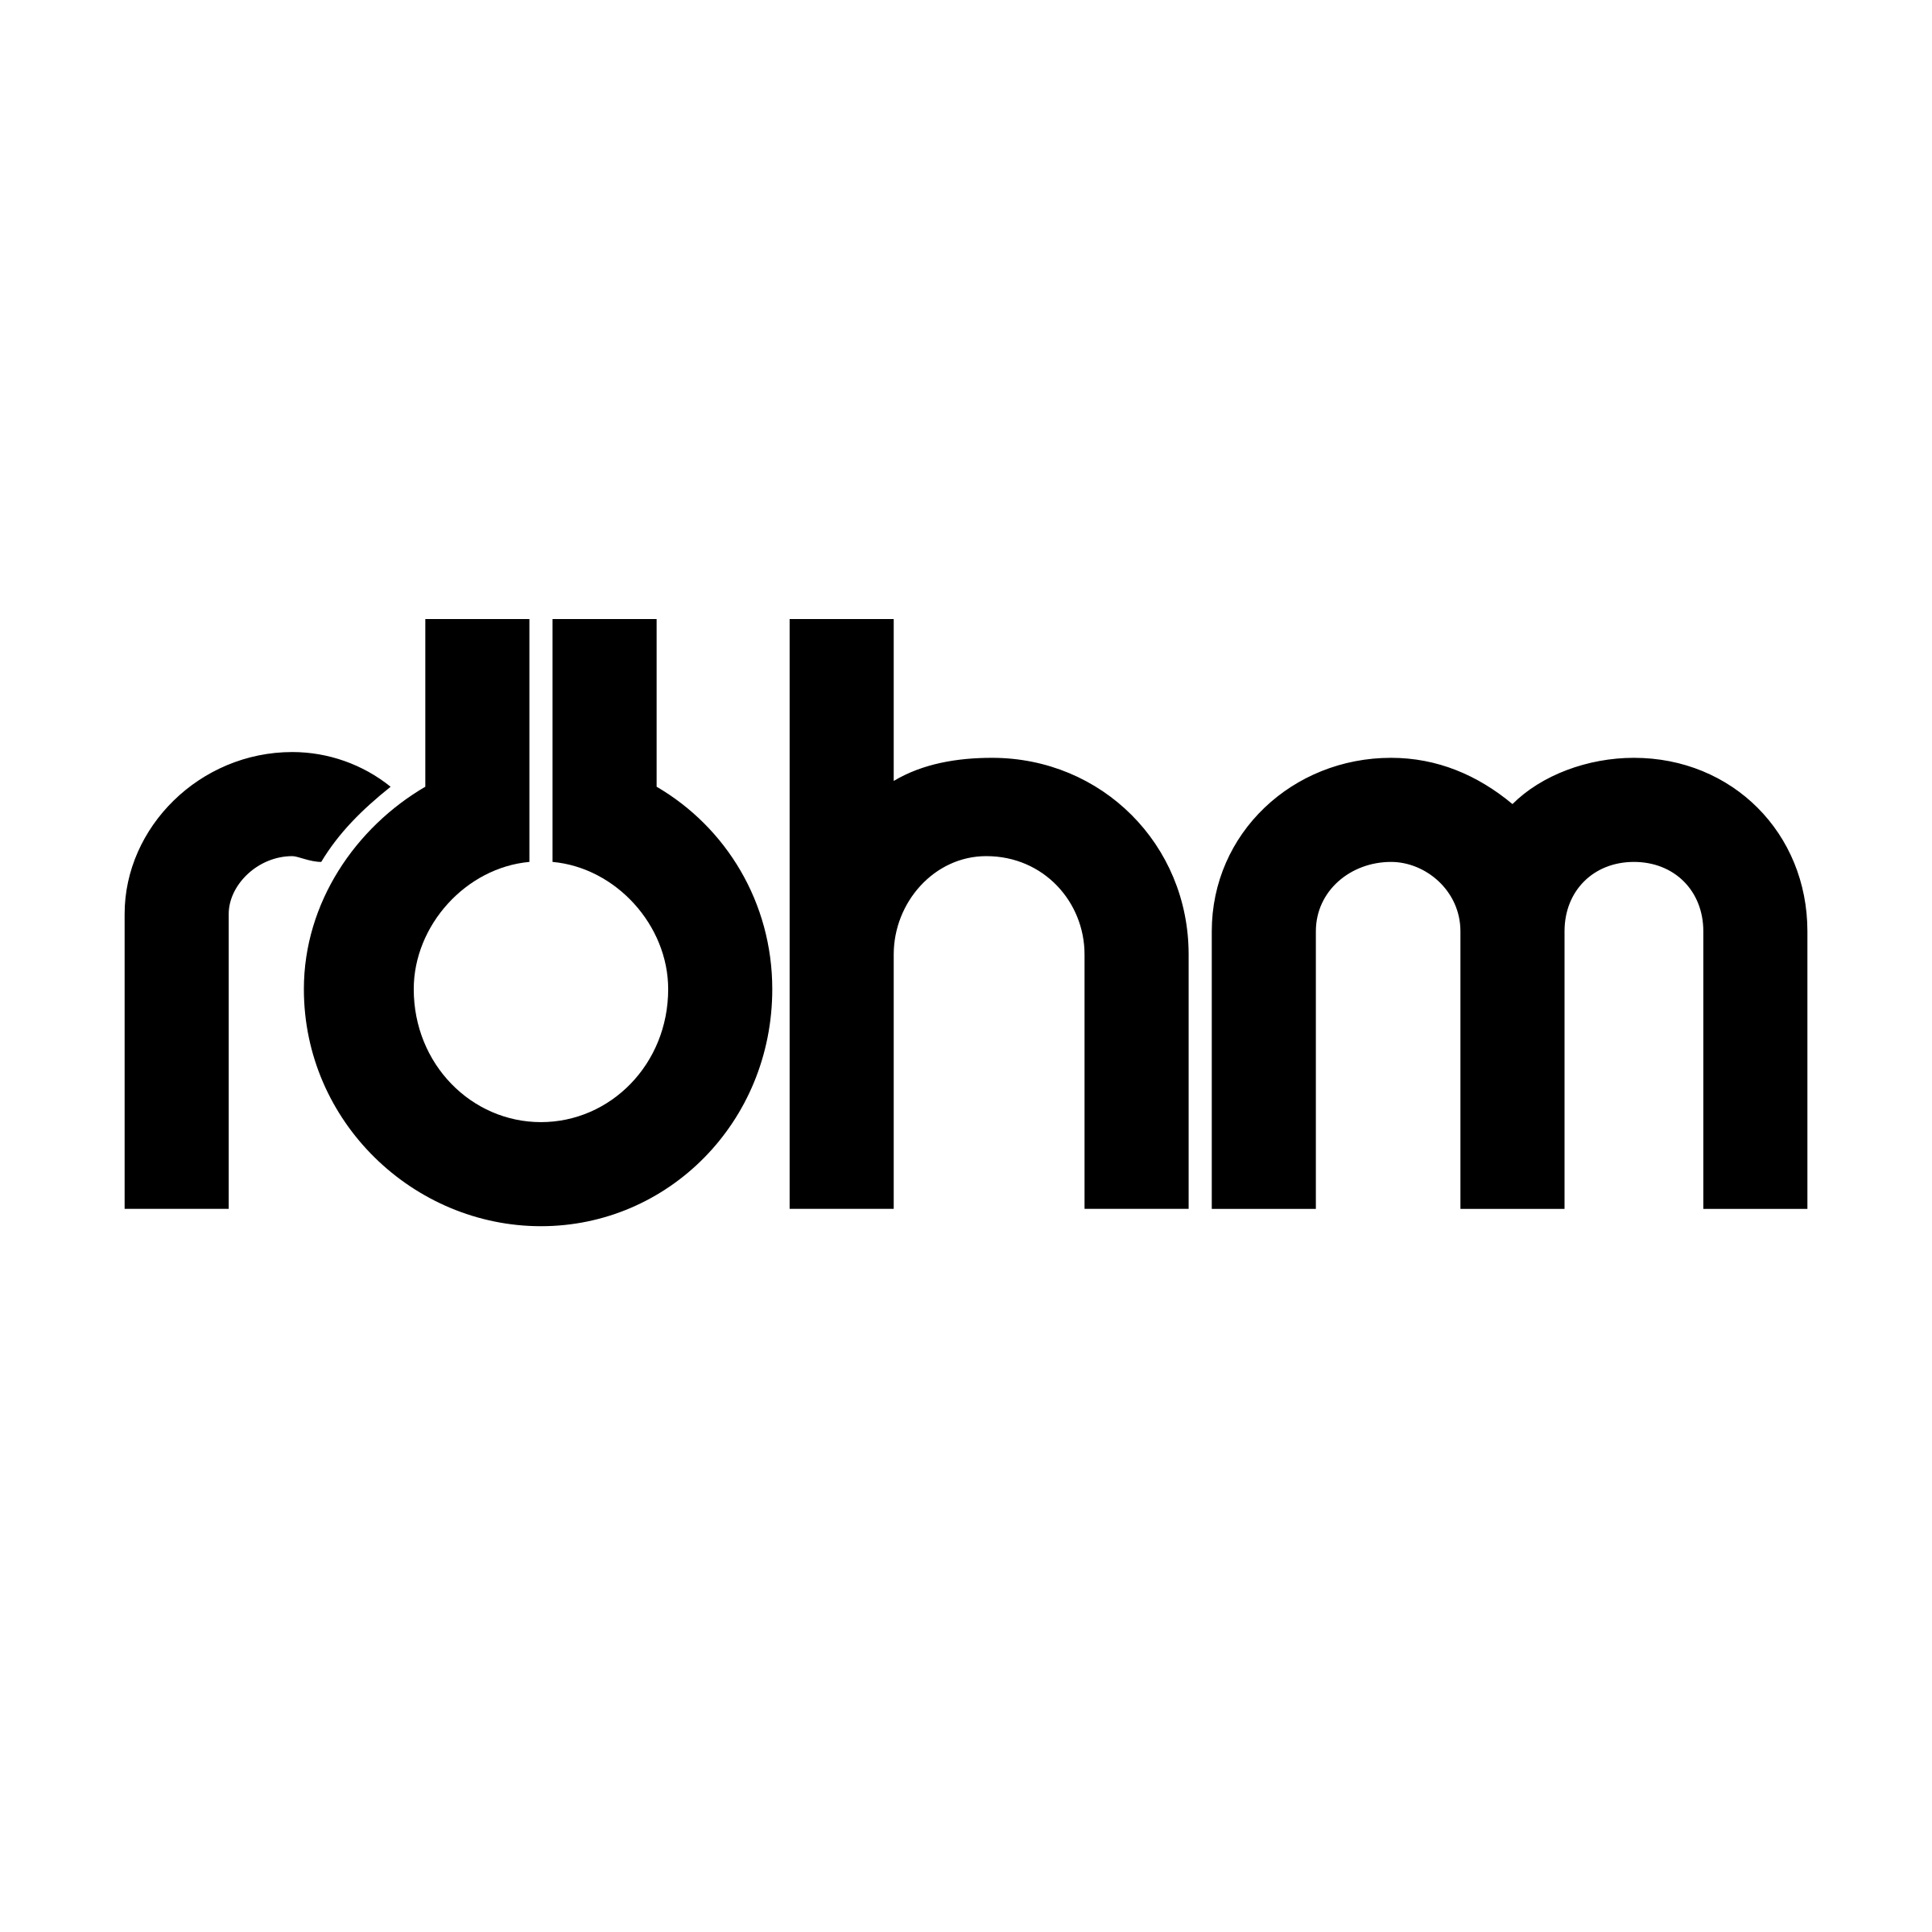 Rohm Logo - Rohm Logo PNG Transparent & SVG Vector - Freebie Supply